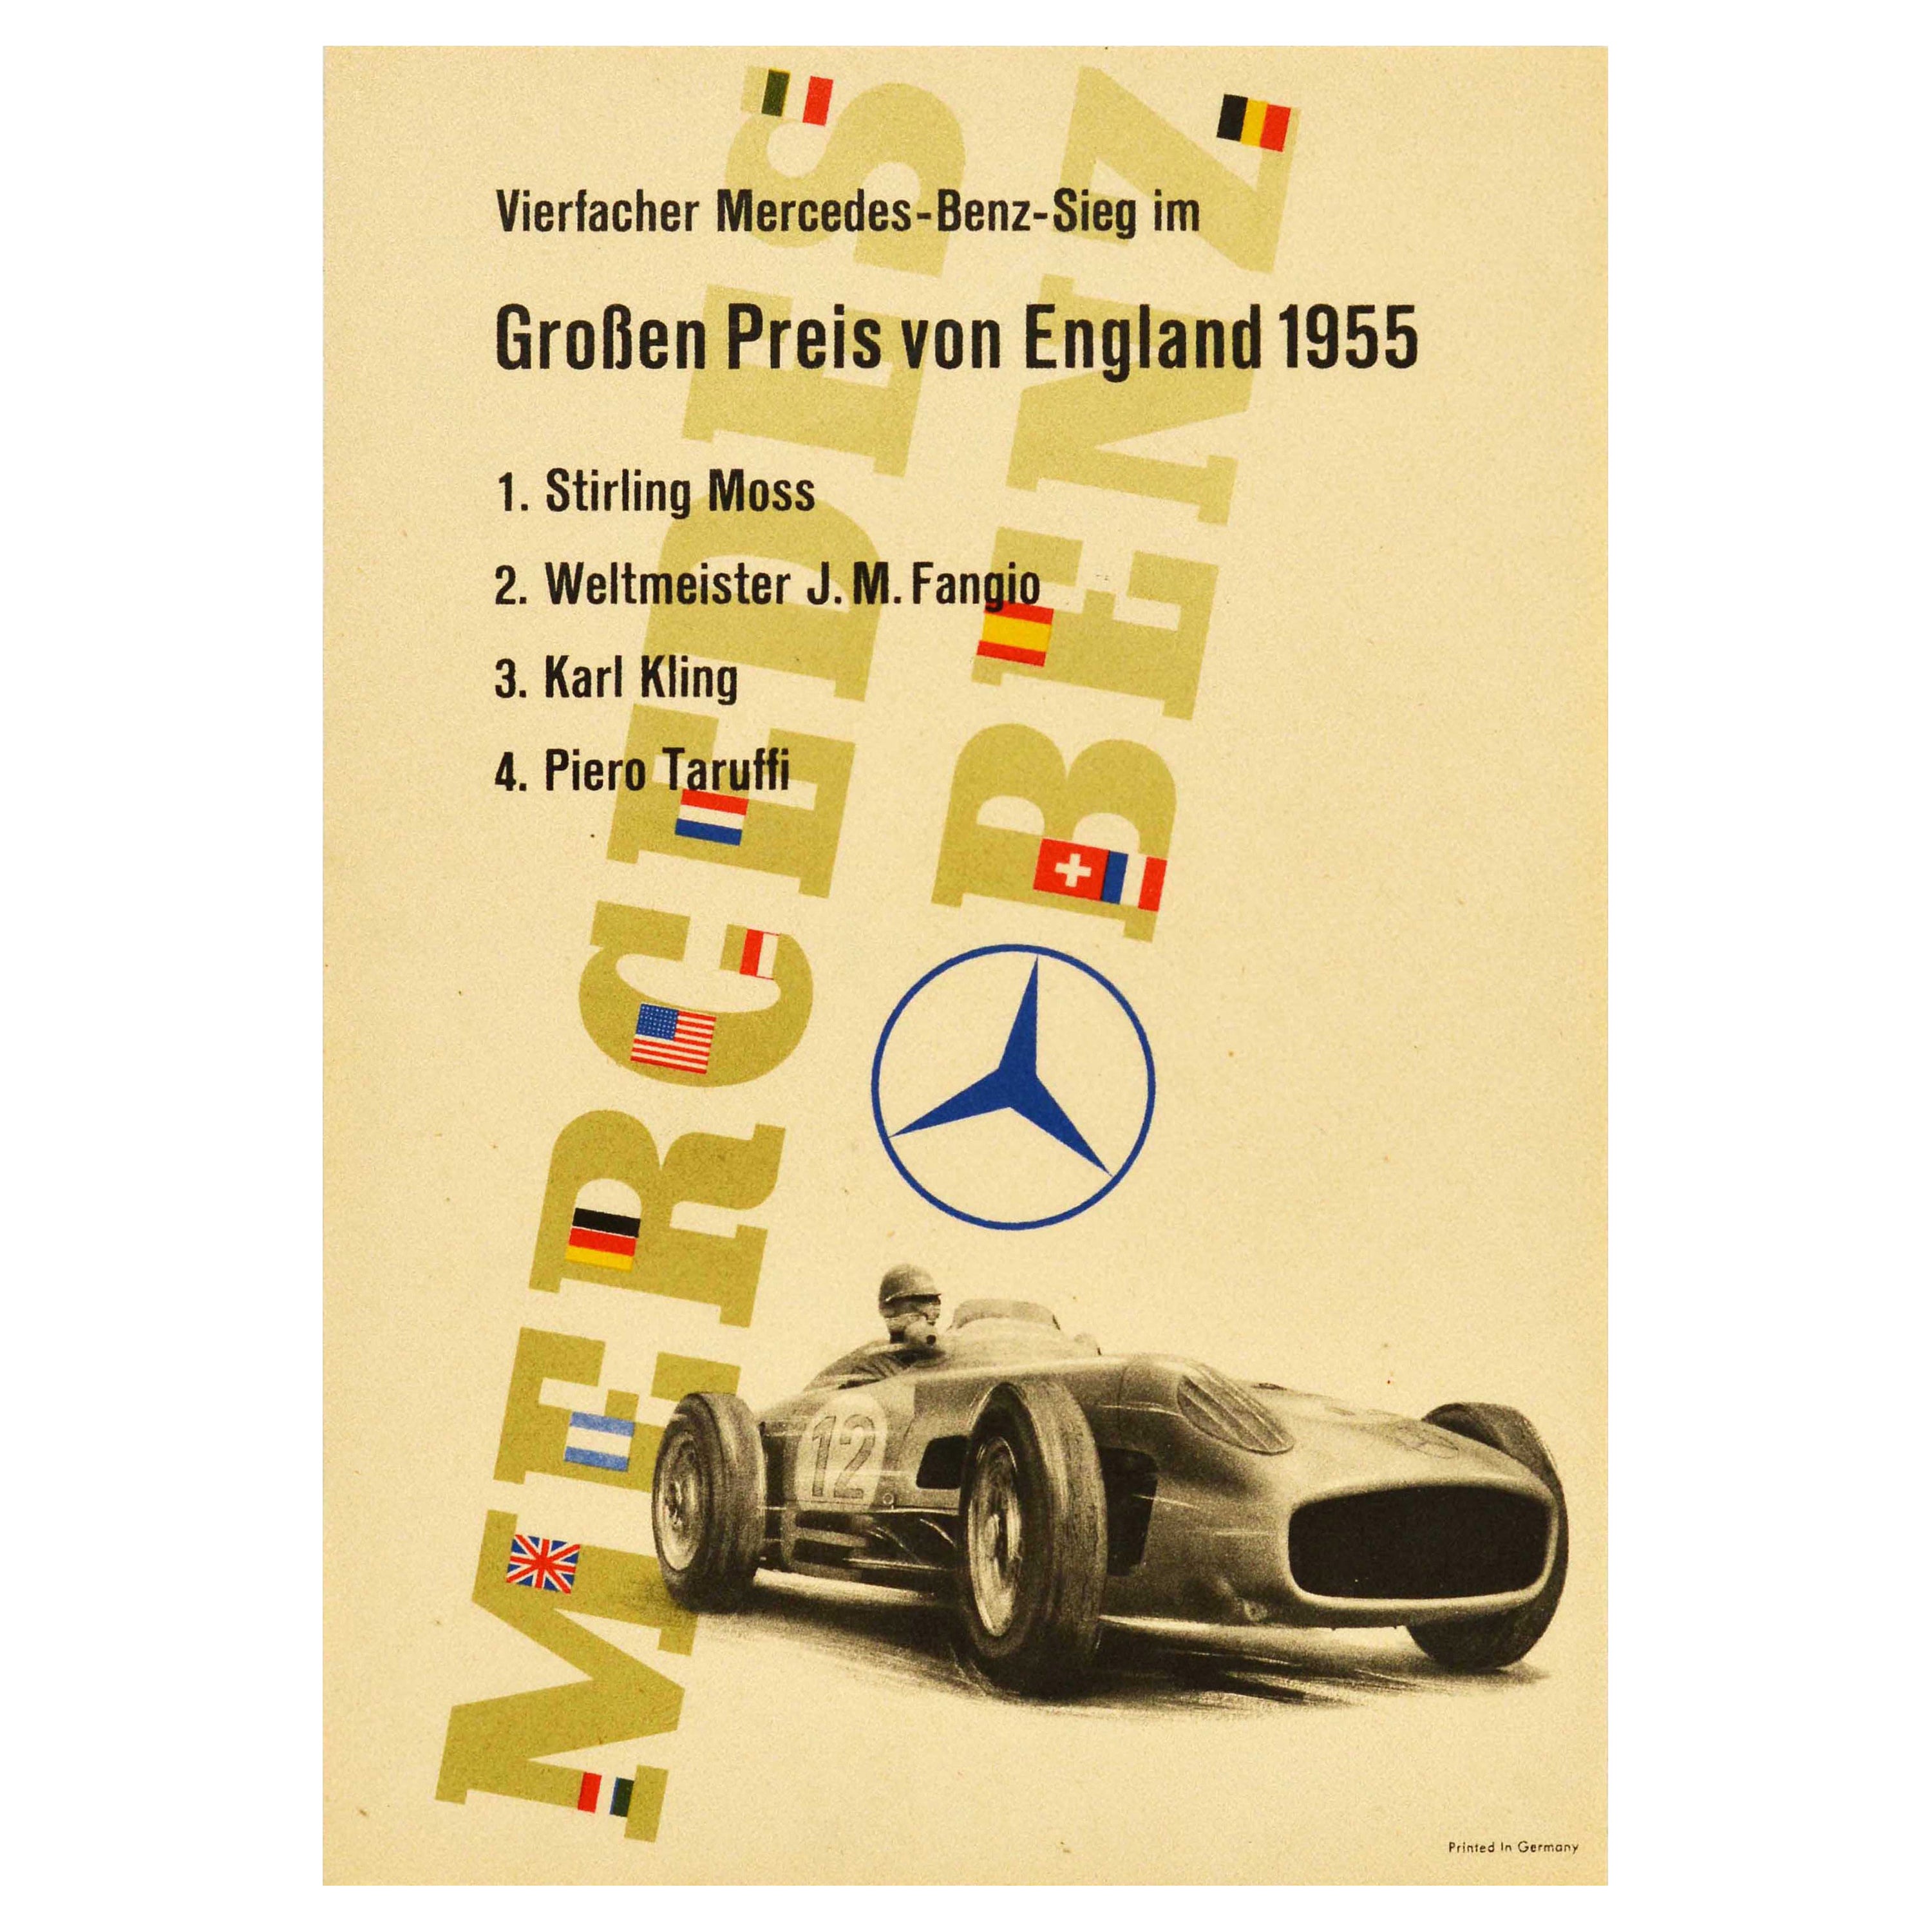 Details about   Mercedes Benz 1955 Big Prize Italy Vintage Poster Print German Car Racing Advert 